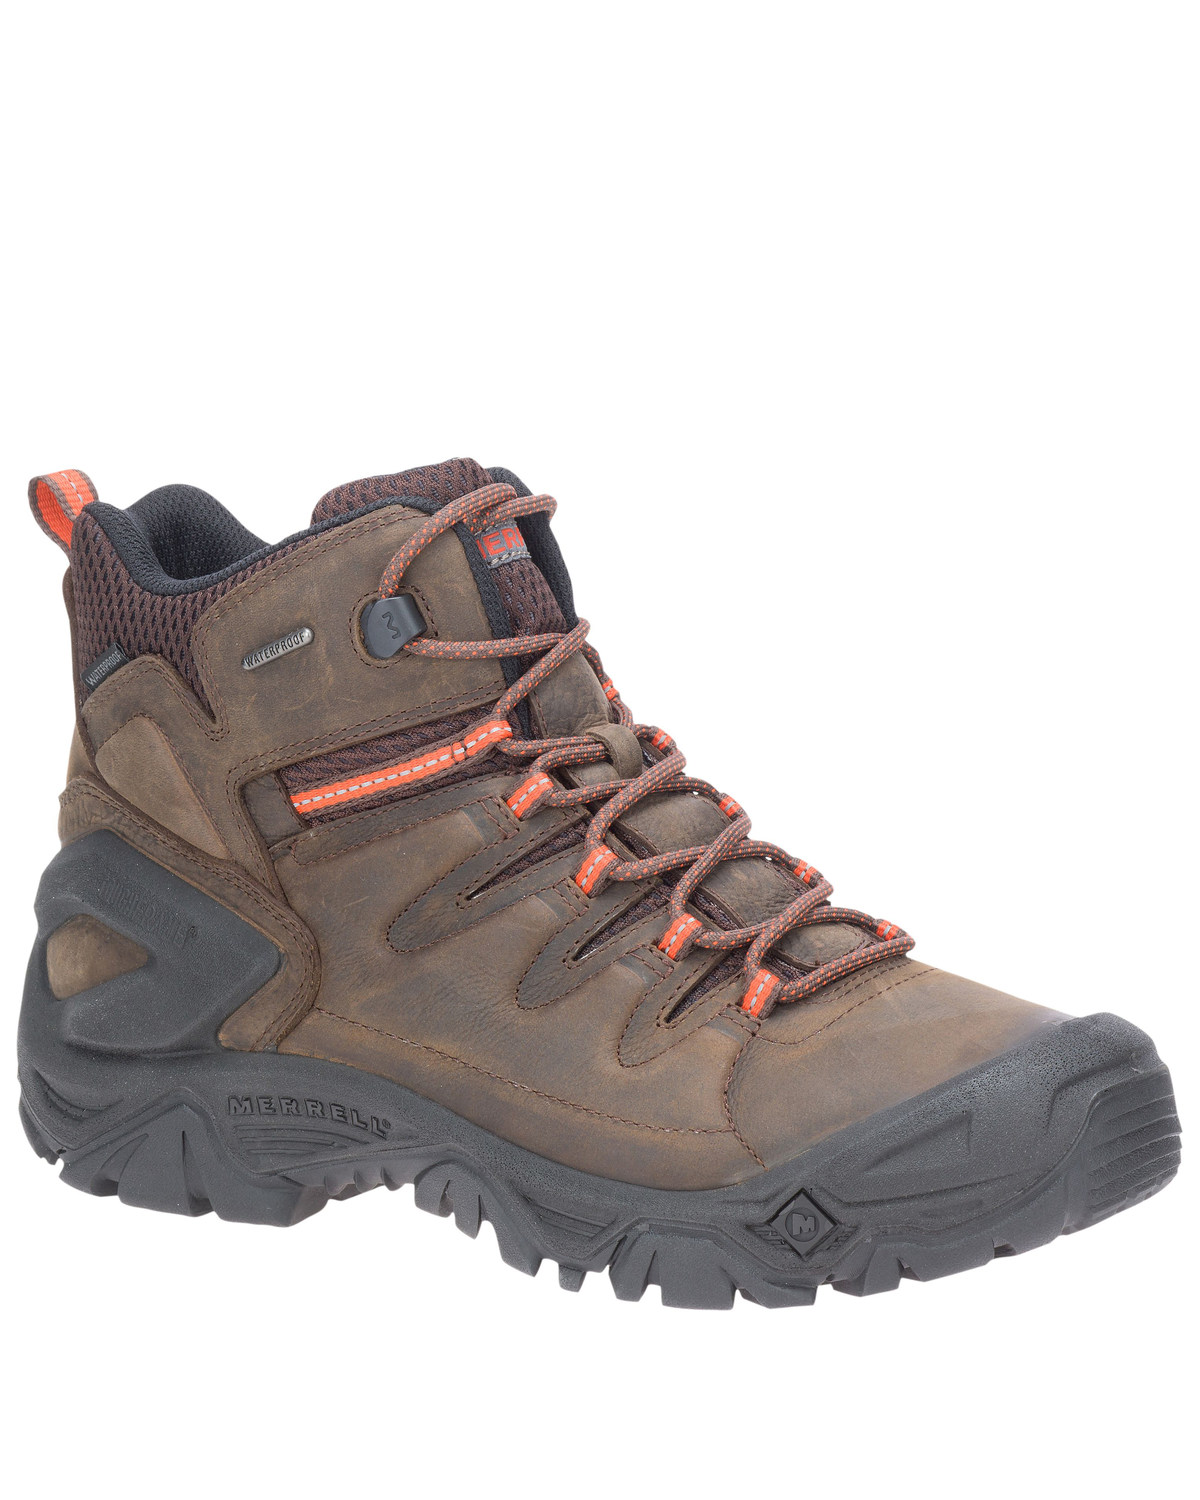 Merrell Men's Strongbound Peak Hiking Boots - Soft Toe